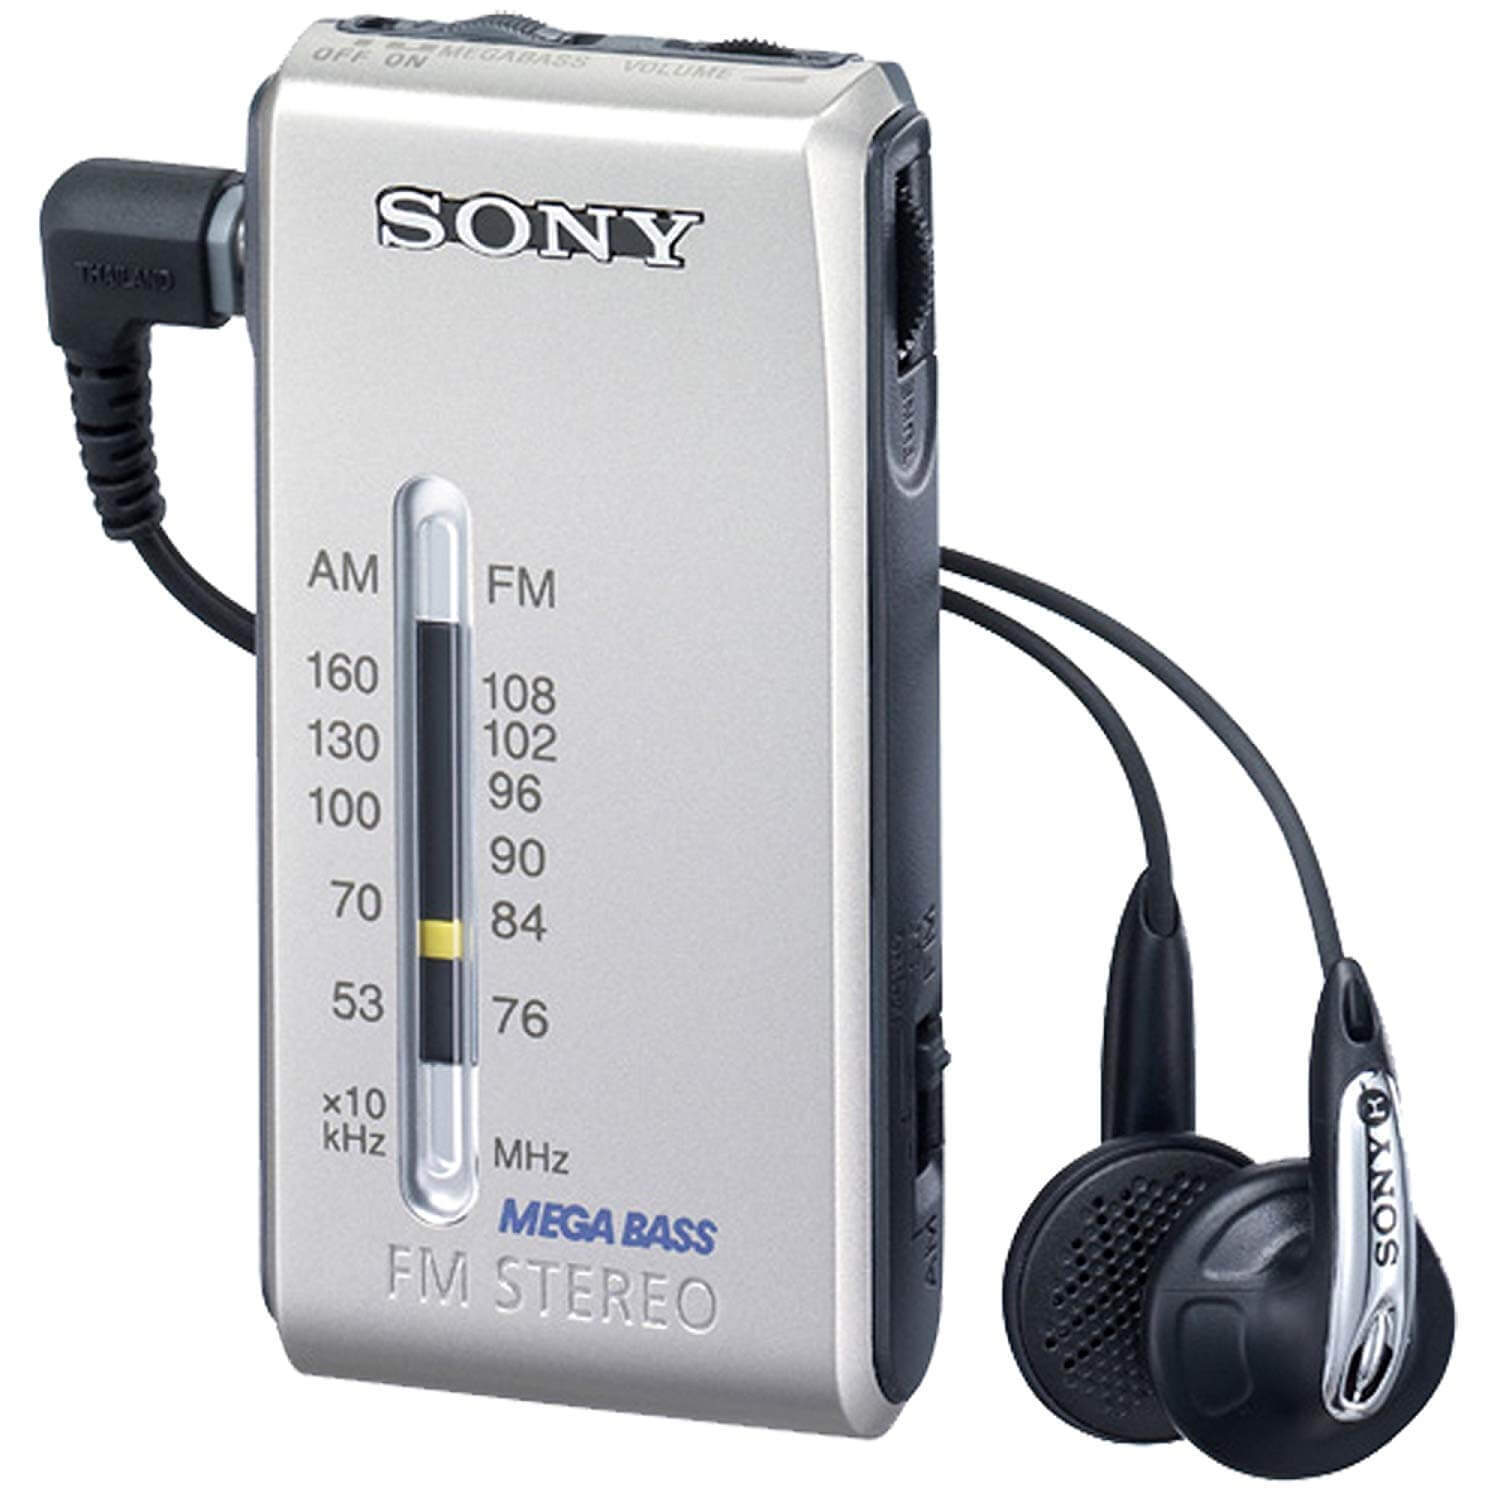 Sony SRF-S84 FM AM Radio Walkman